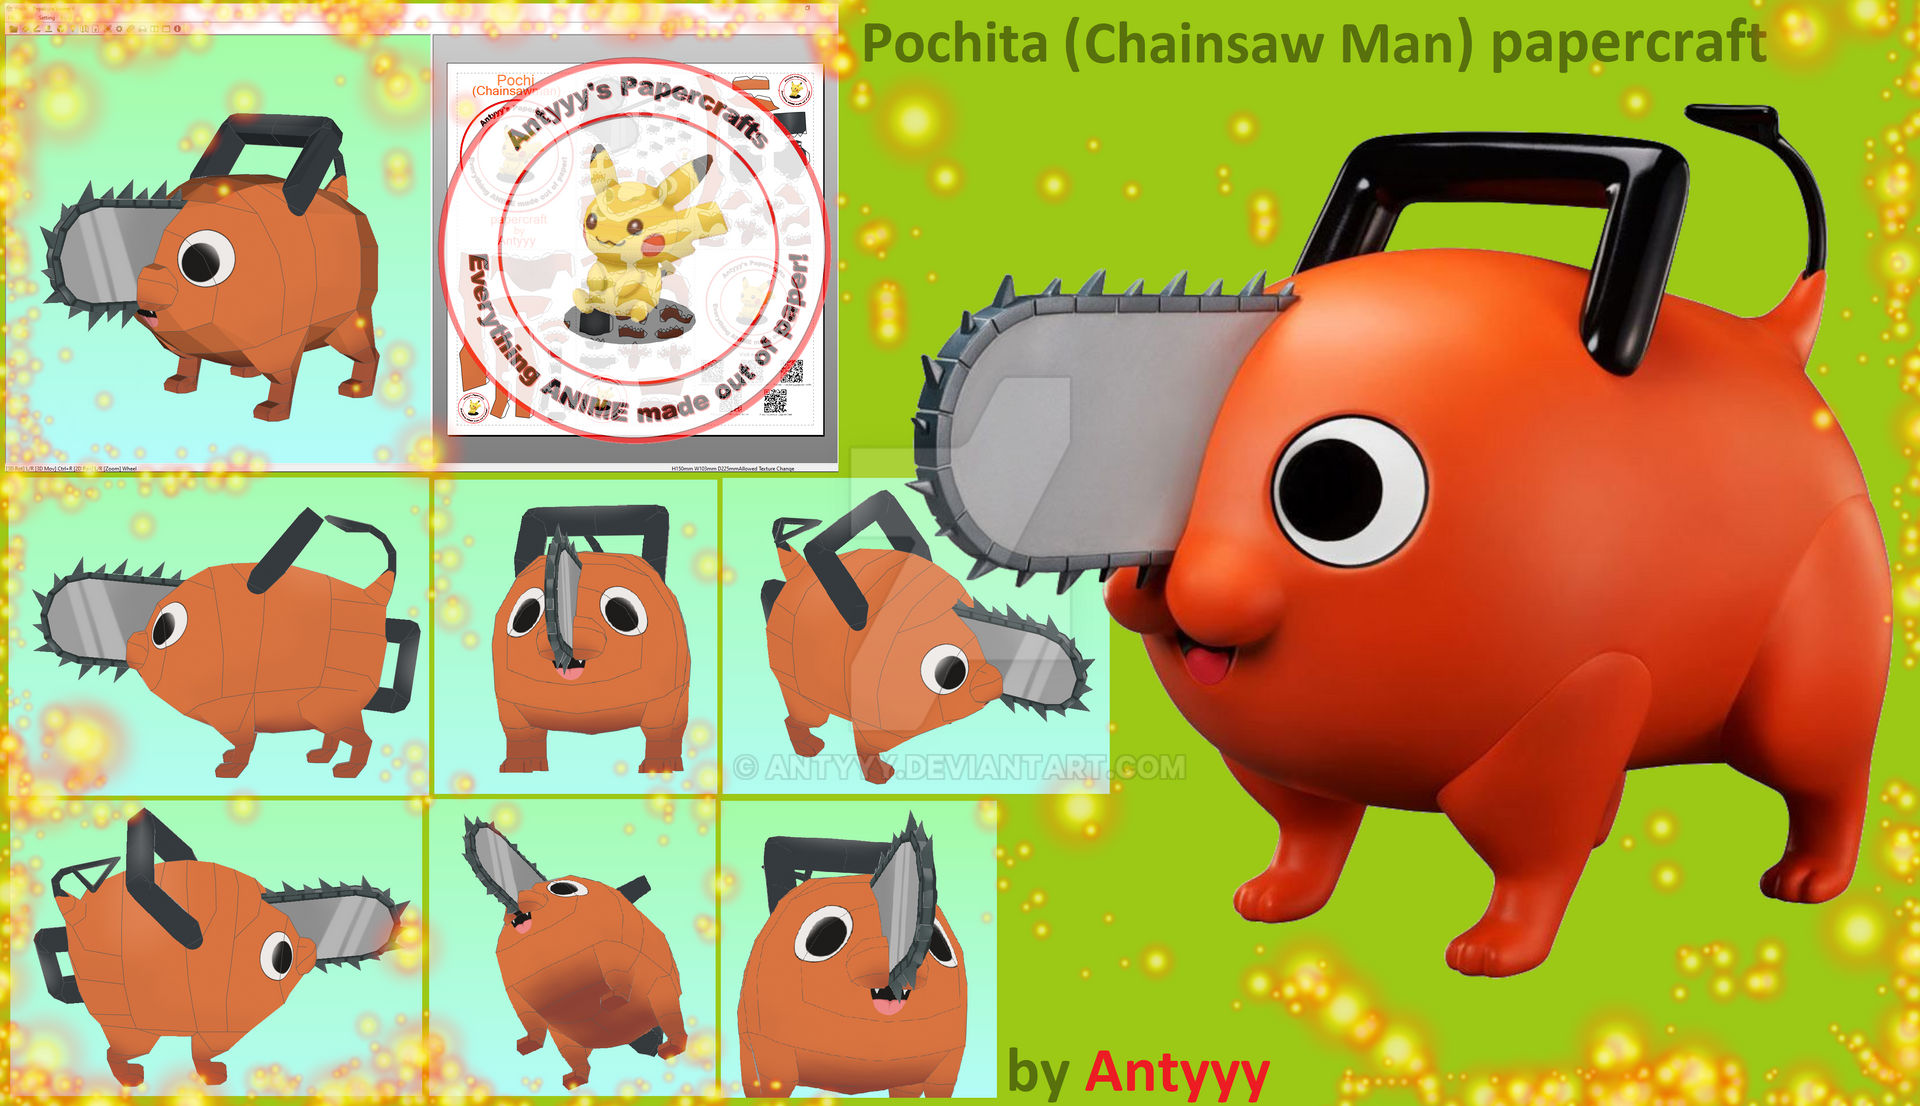 Pochita 2024 Calendar Chainsaw Man Printable PDF Anime 